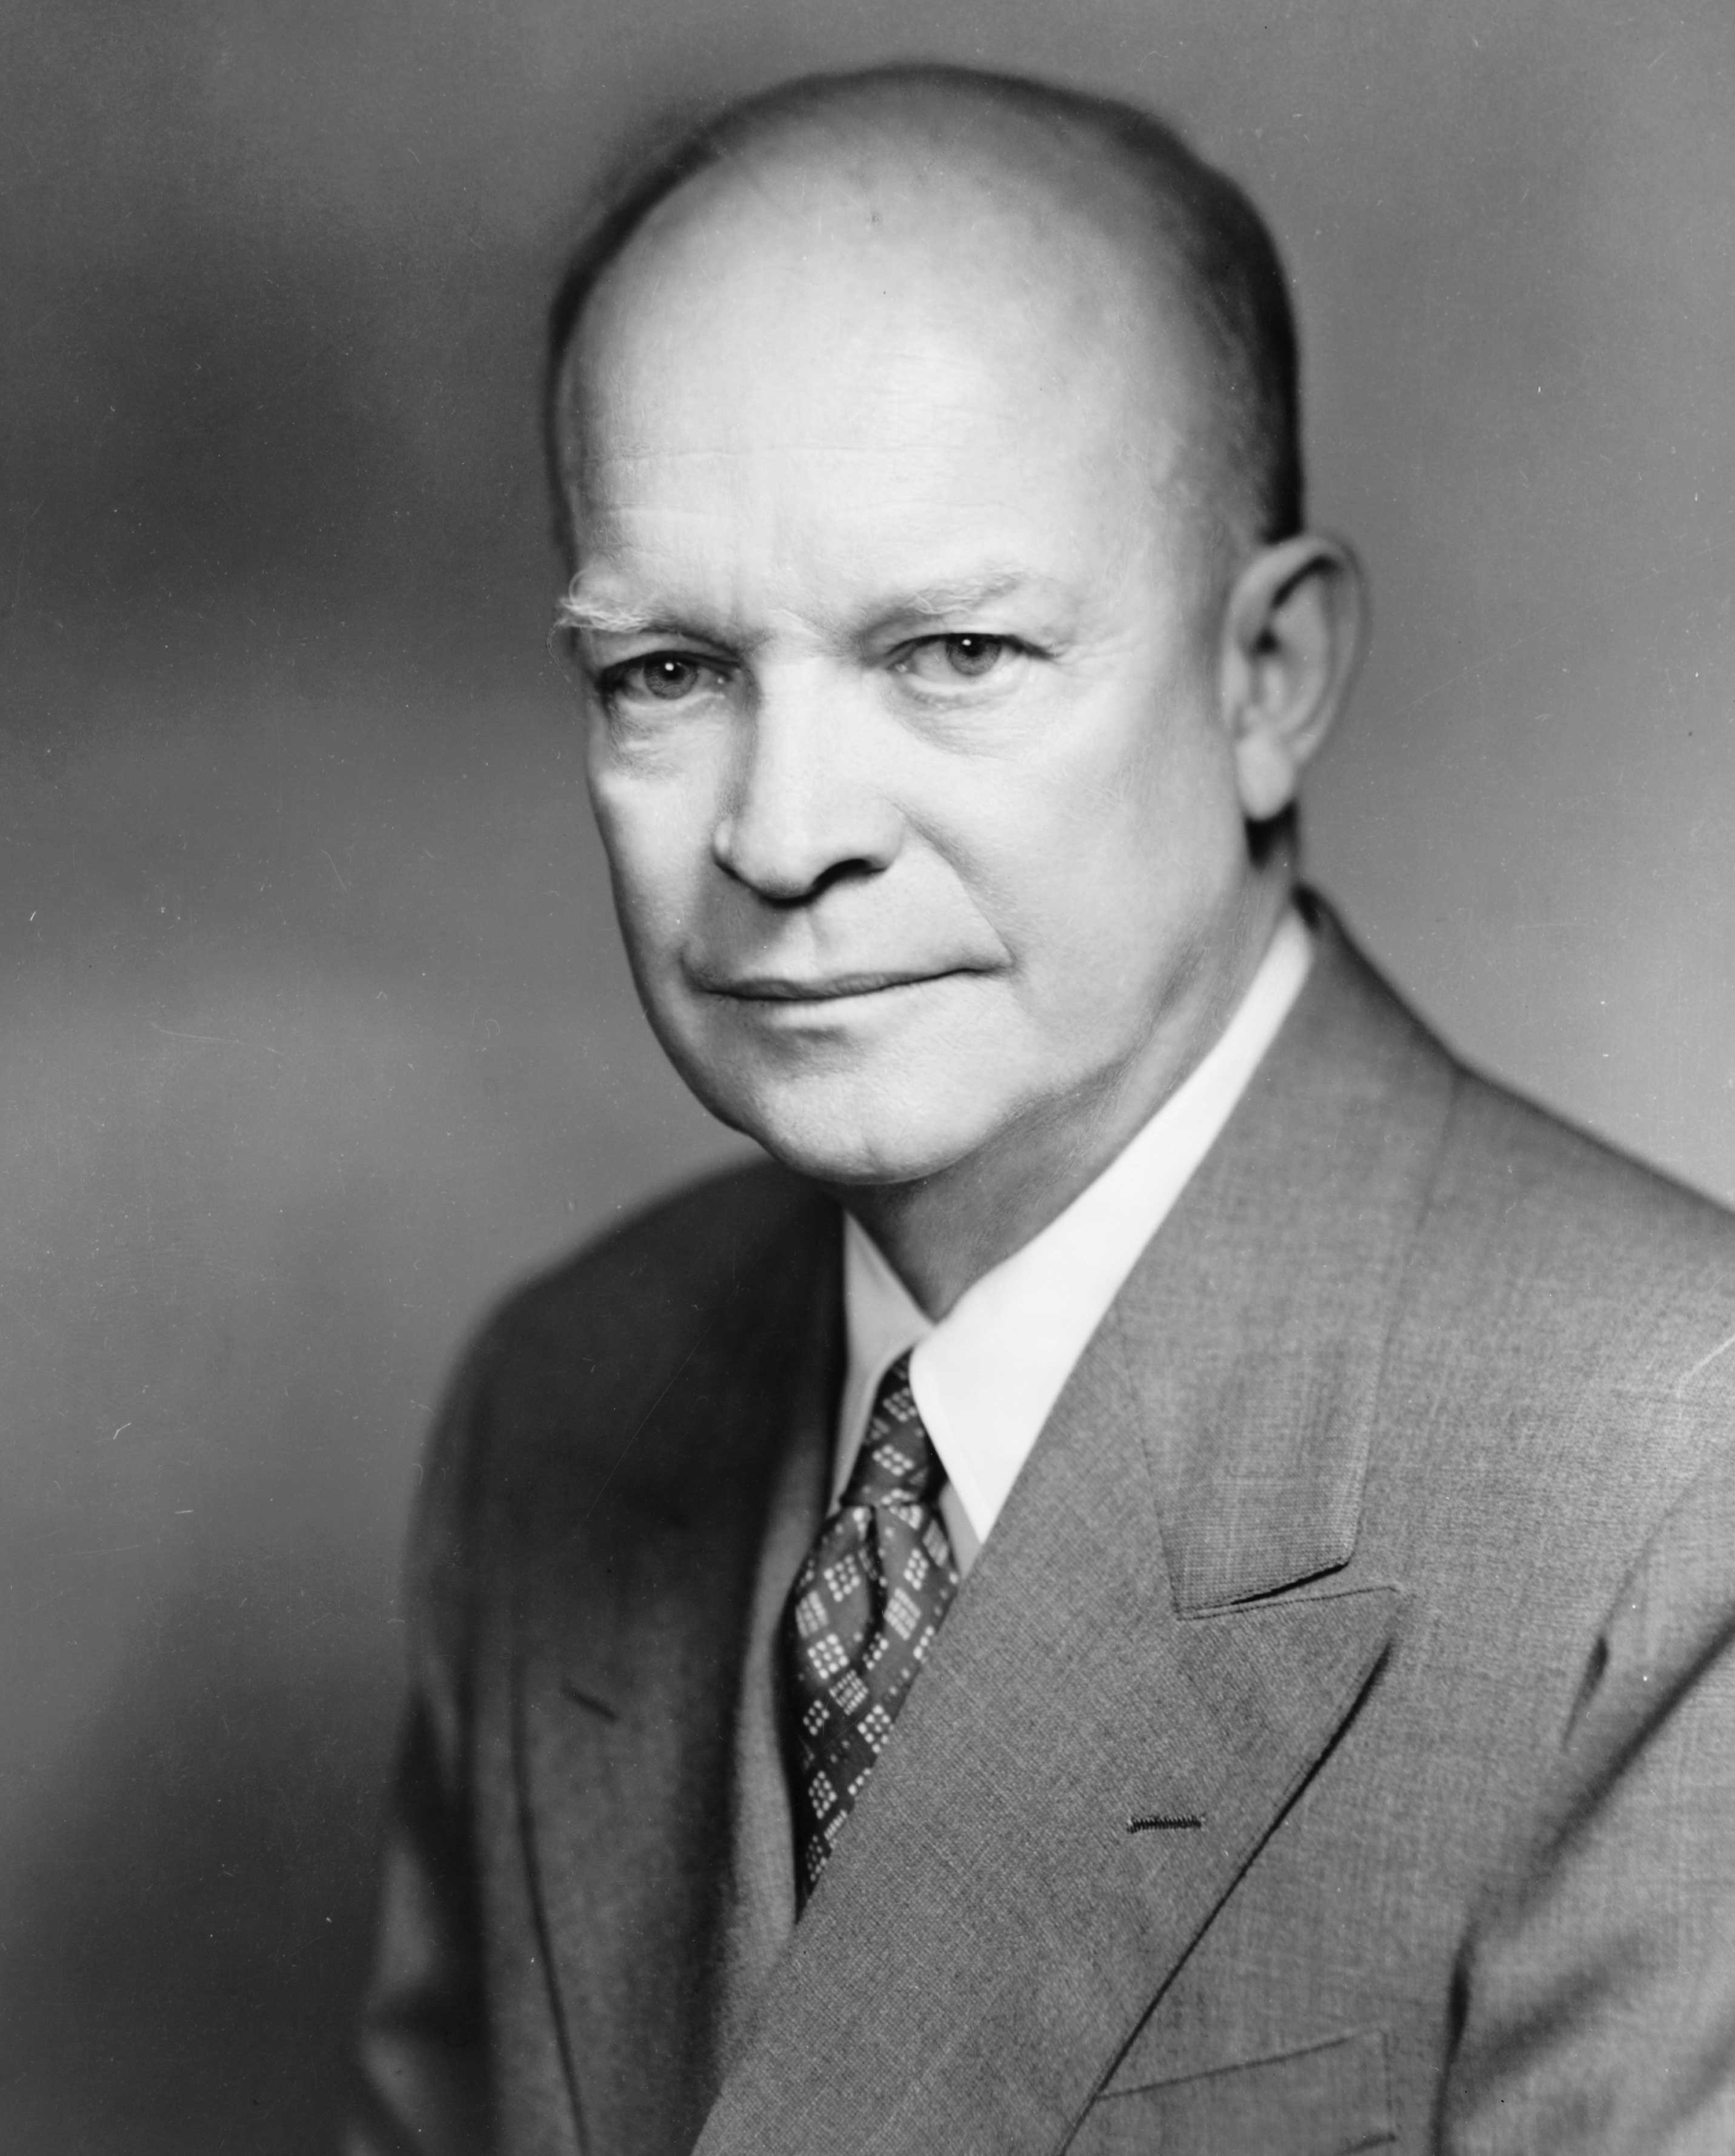 Dwight_David_Eisenhower,_photo_portrait_by_Bachrach,_1952.jpg